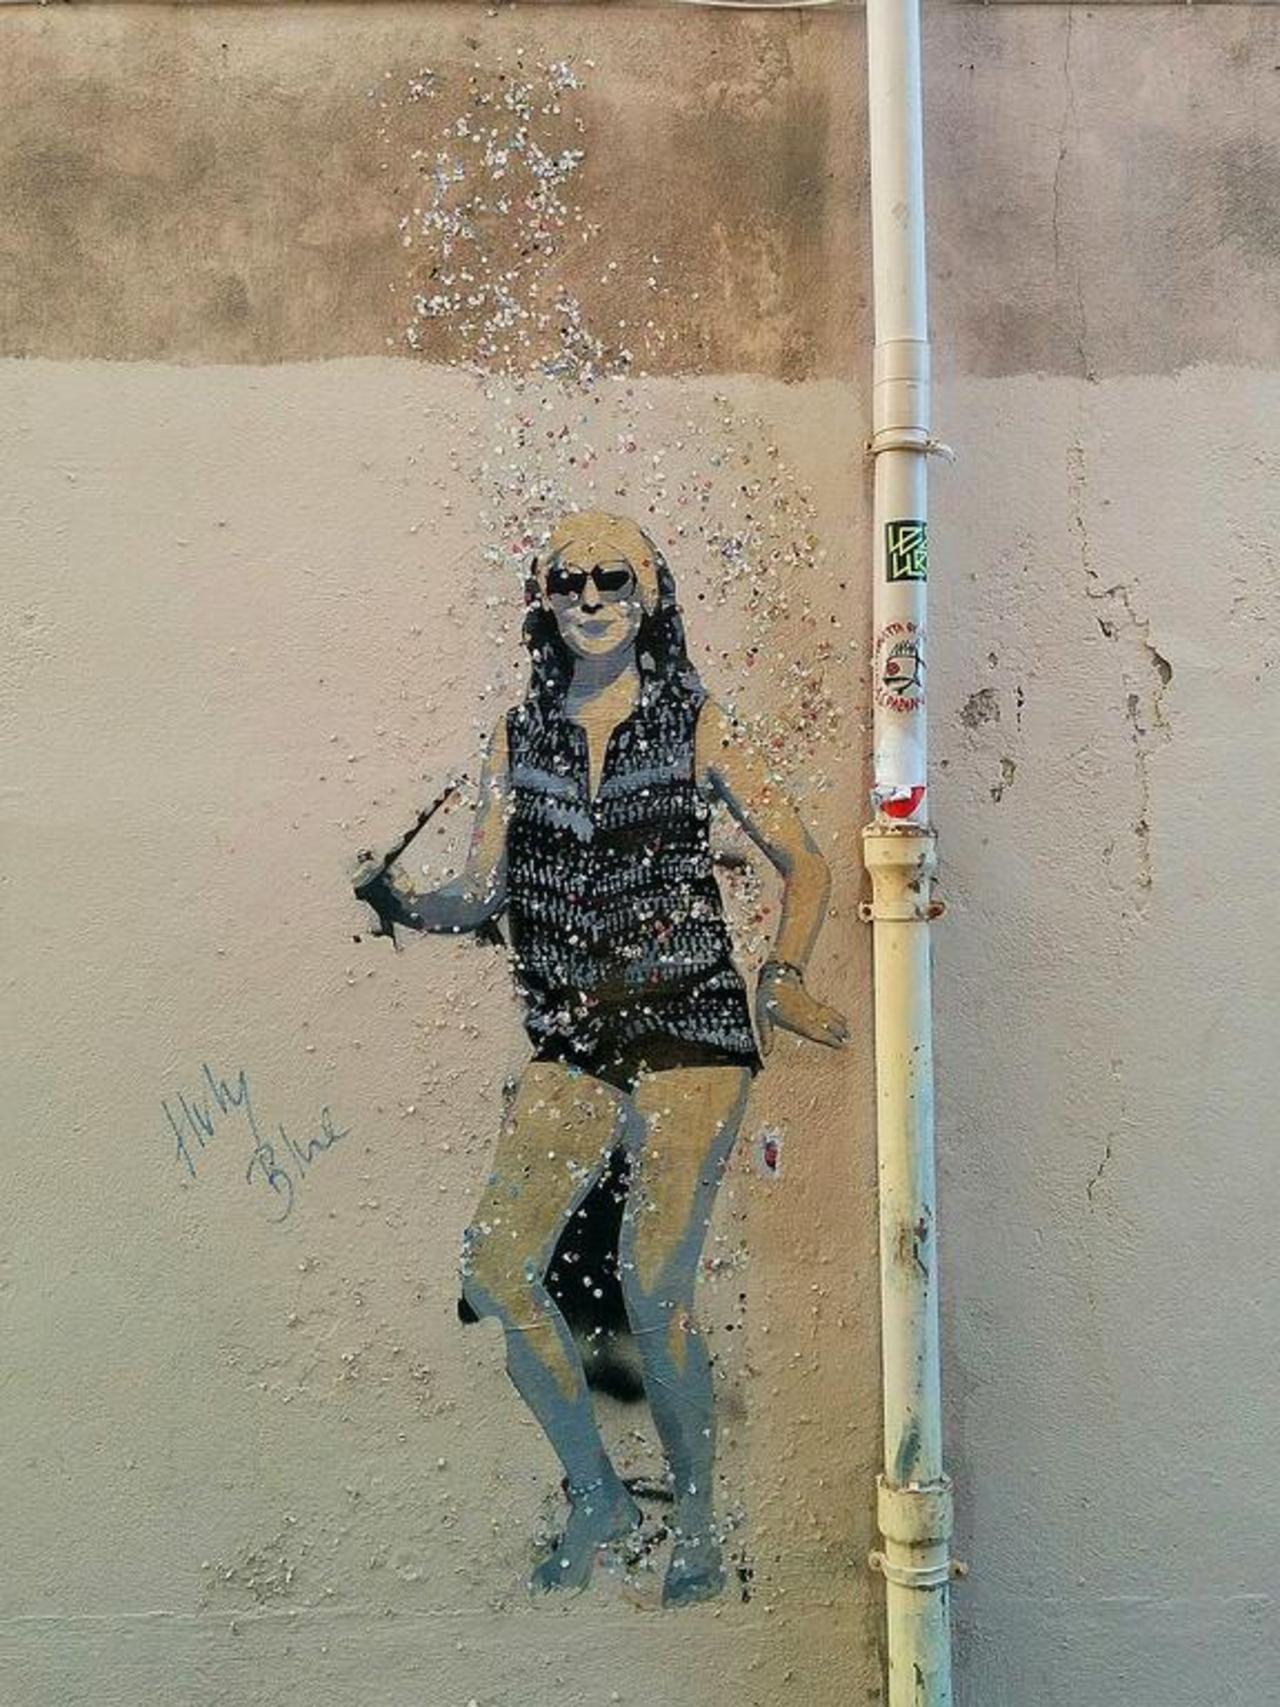 RT @urbacolors: Street Art by anonymous in #Marseille http://www.urbacolors.com #art #mural #graffiti #streetart http://t.co/nXbZnEz45R